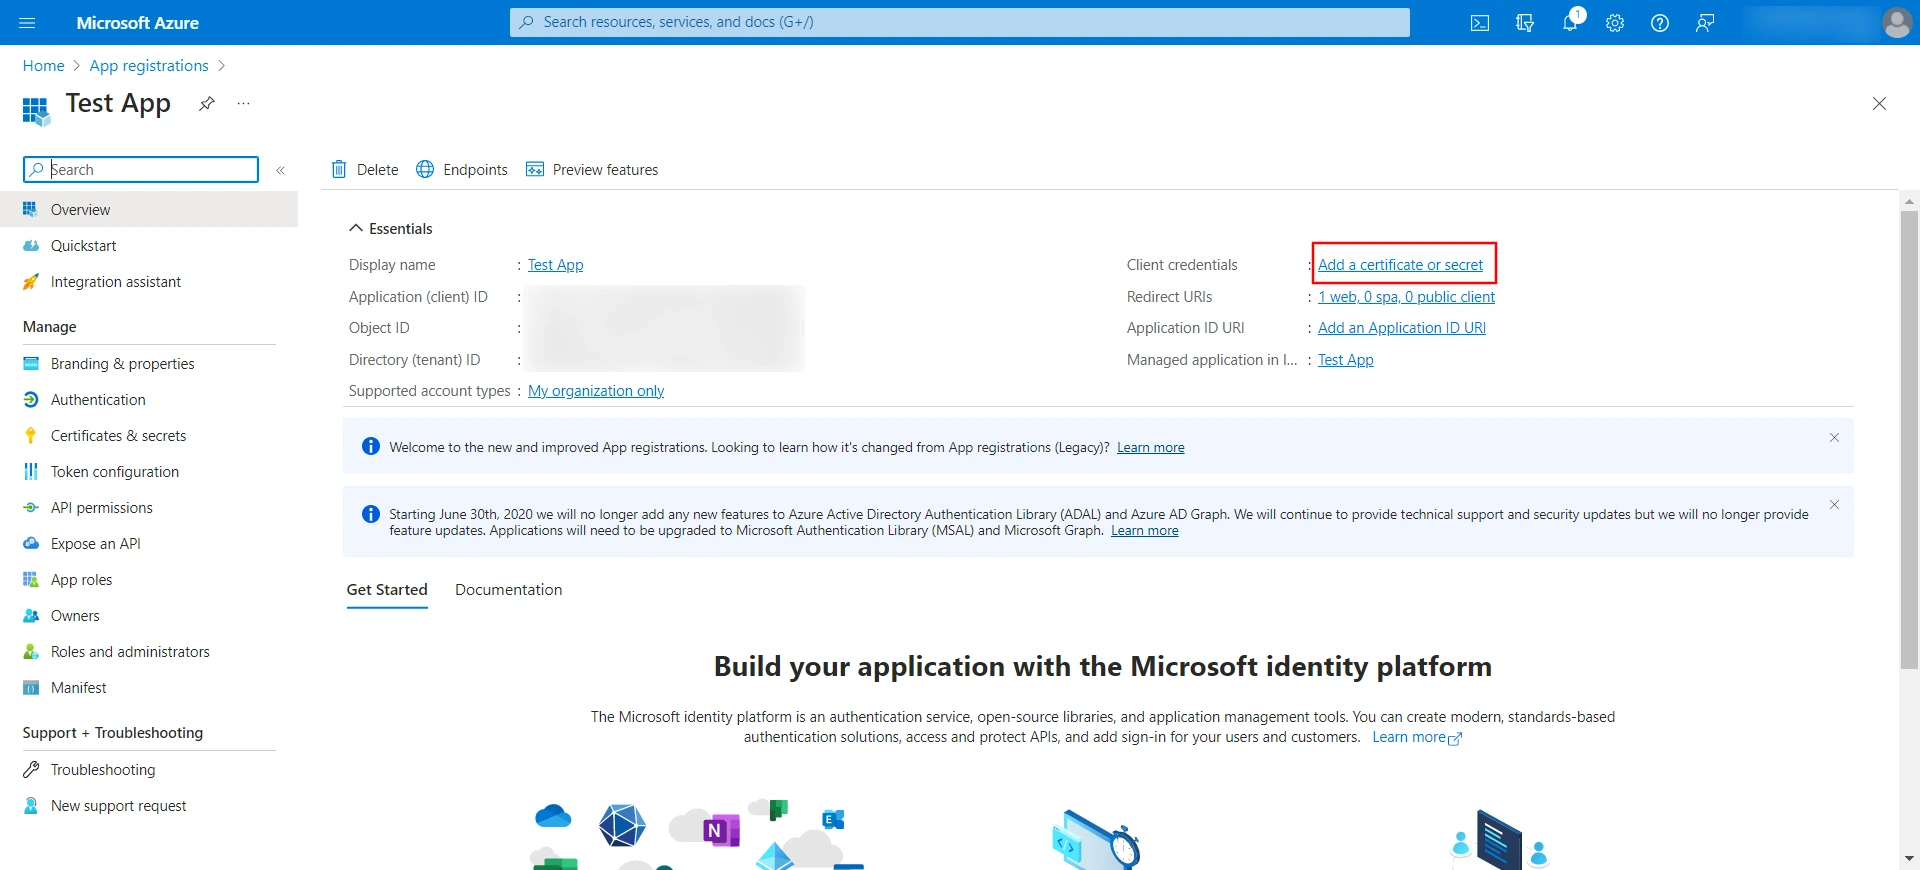 Azure AD portal - Click on Add a certificate or secret link